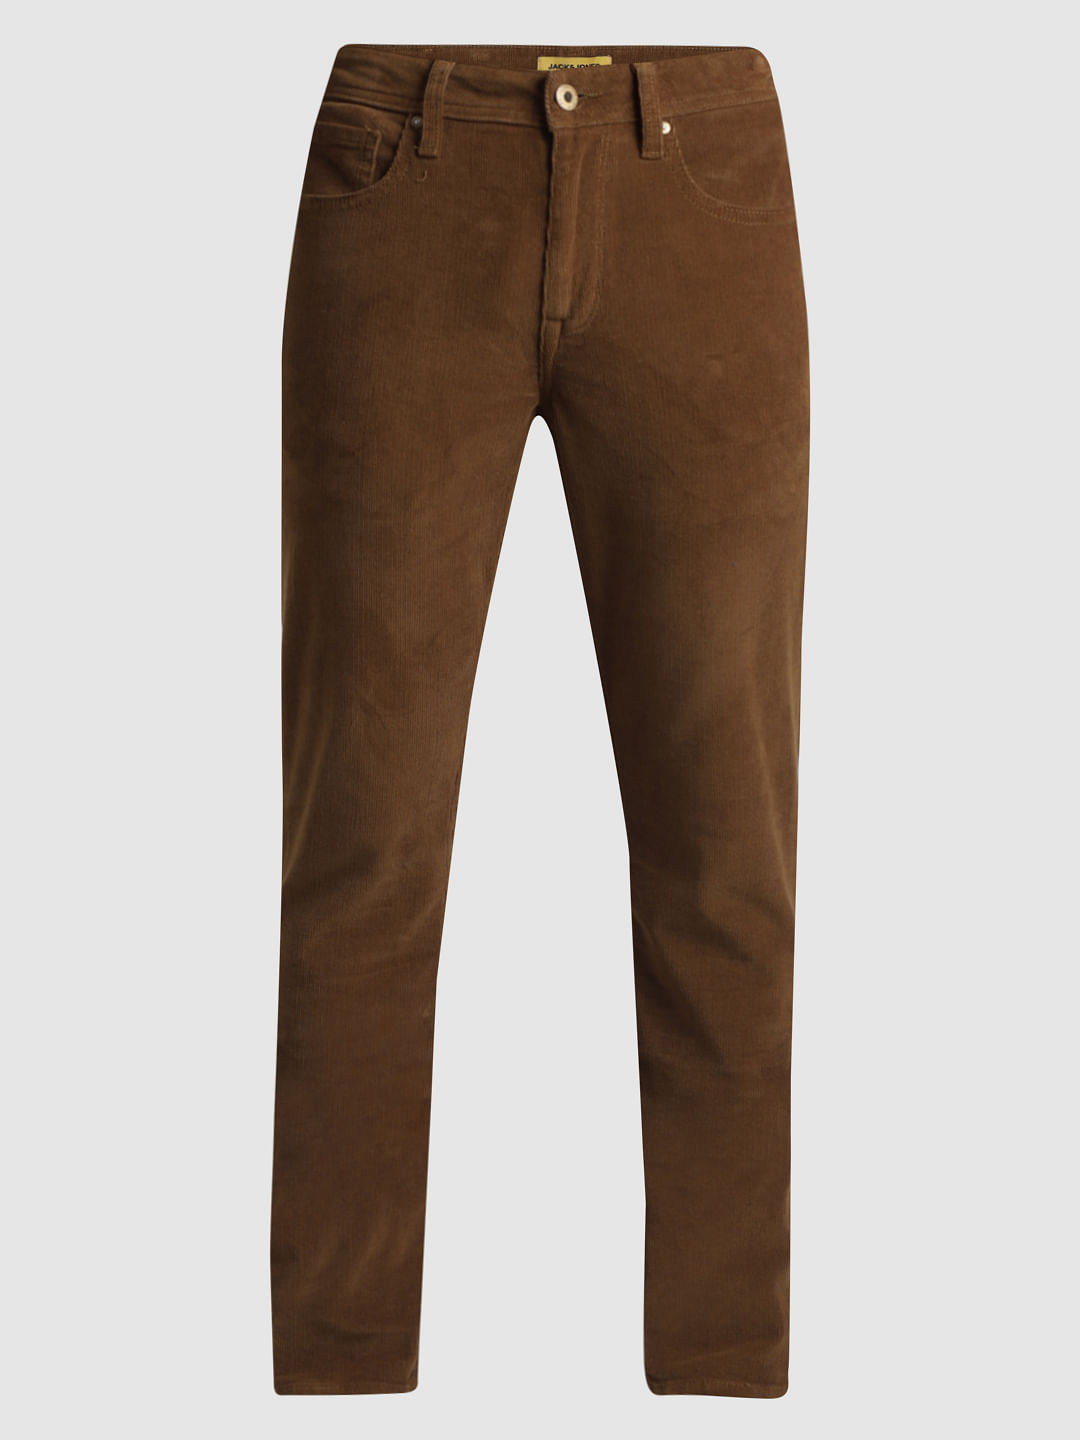 Buy Men's Pants Beige Men's Corduroy Pants XL Casual Pants Chino Pants  Retro Pants Everyday Pants Golf Pants Corduroy Trousers Work Pants Online  in India - Etsy